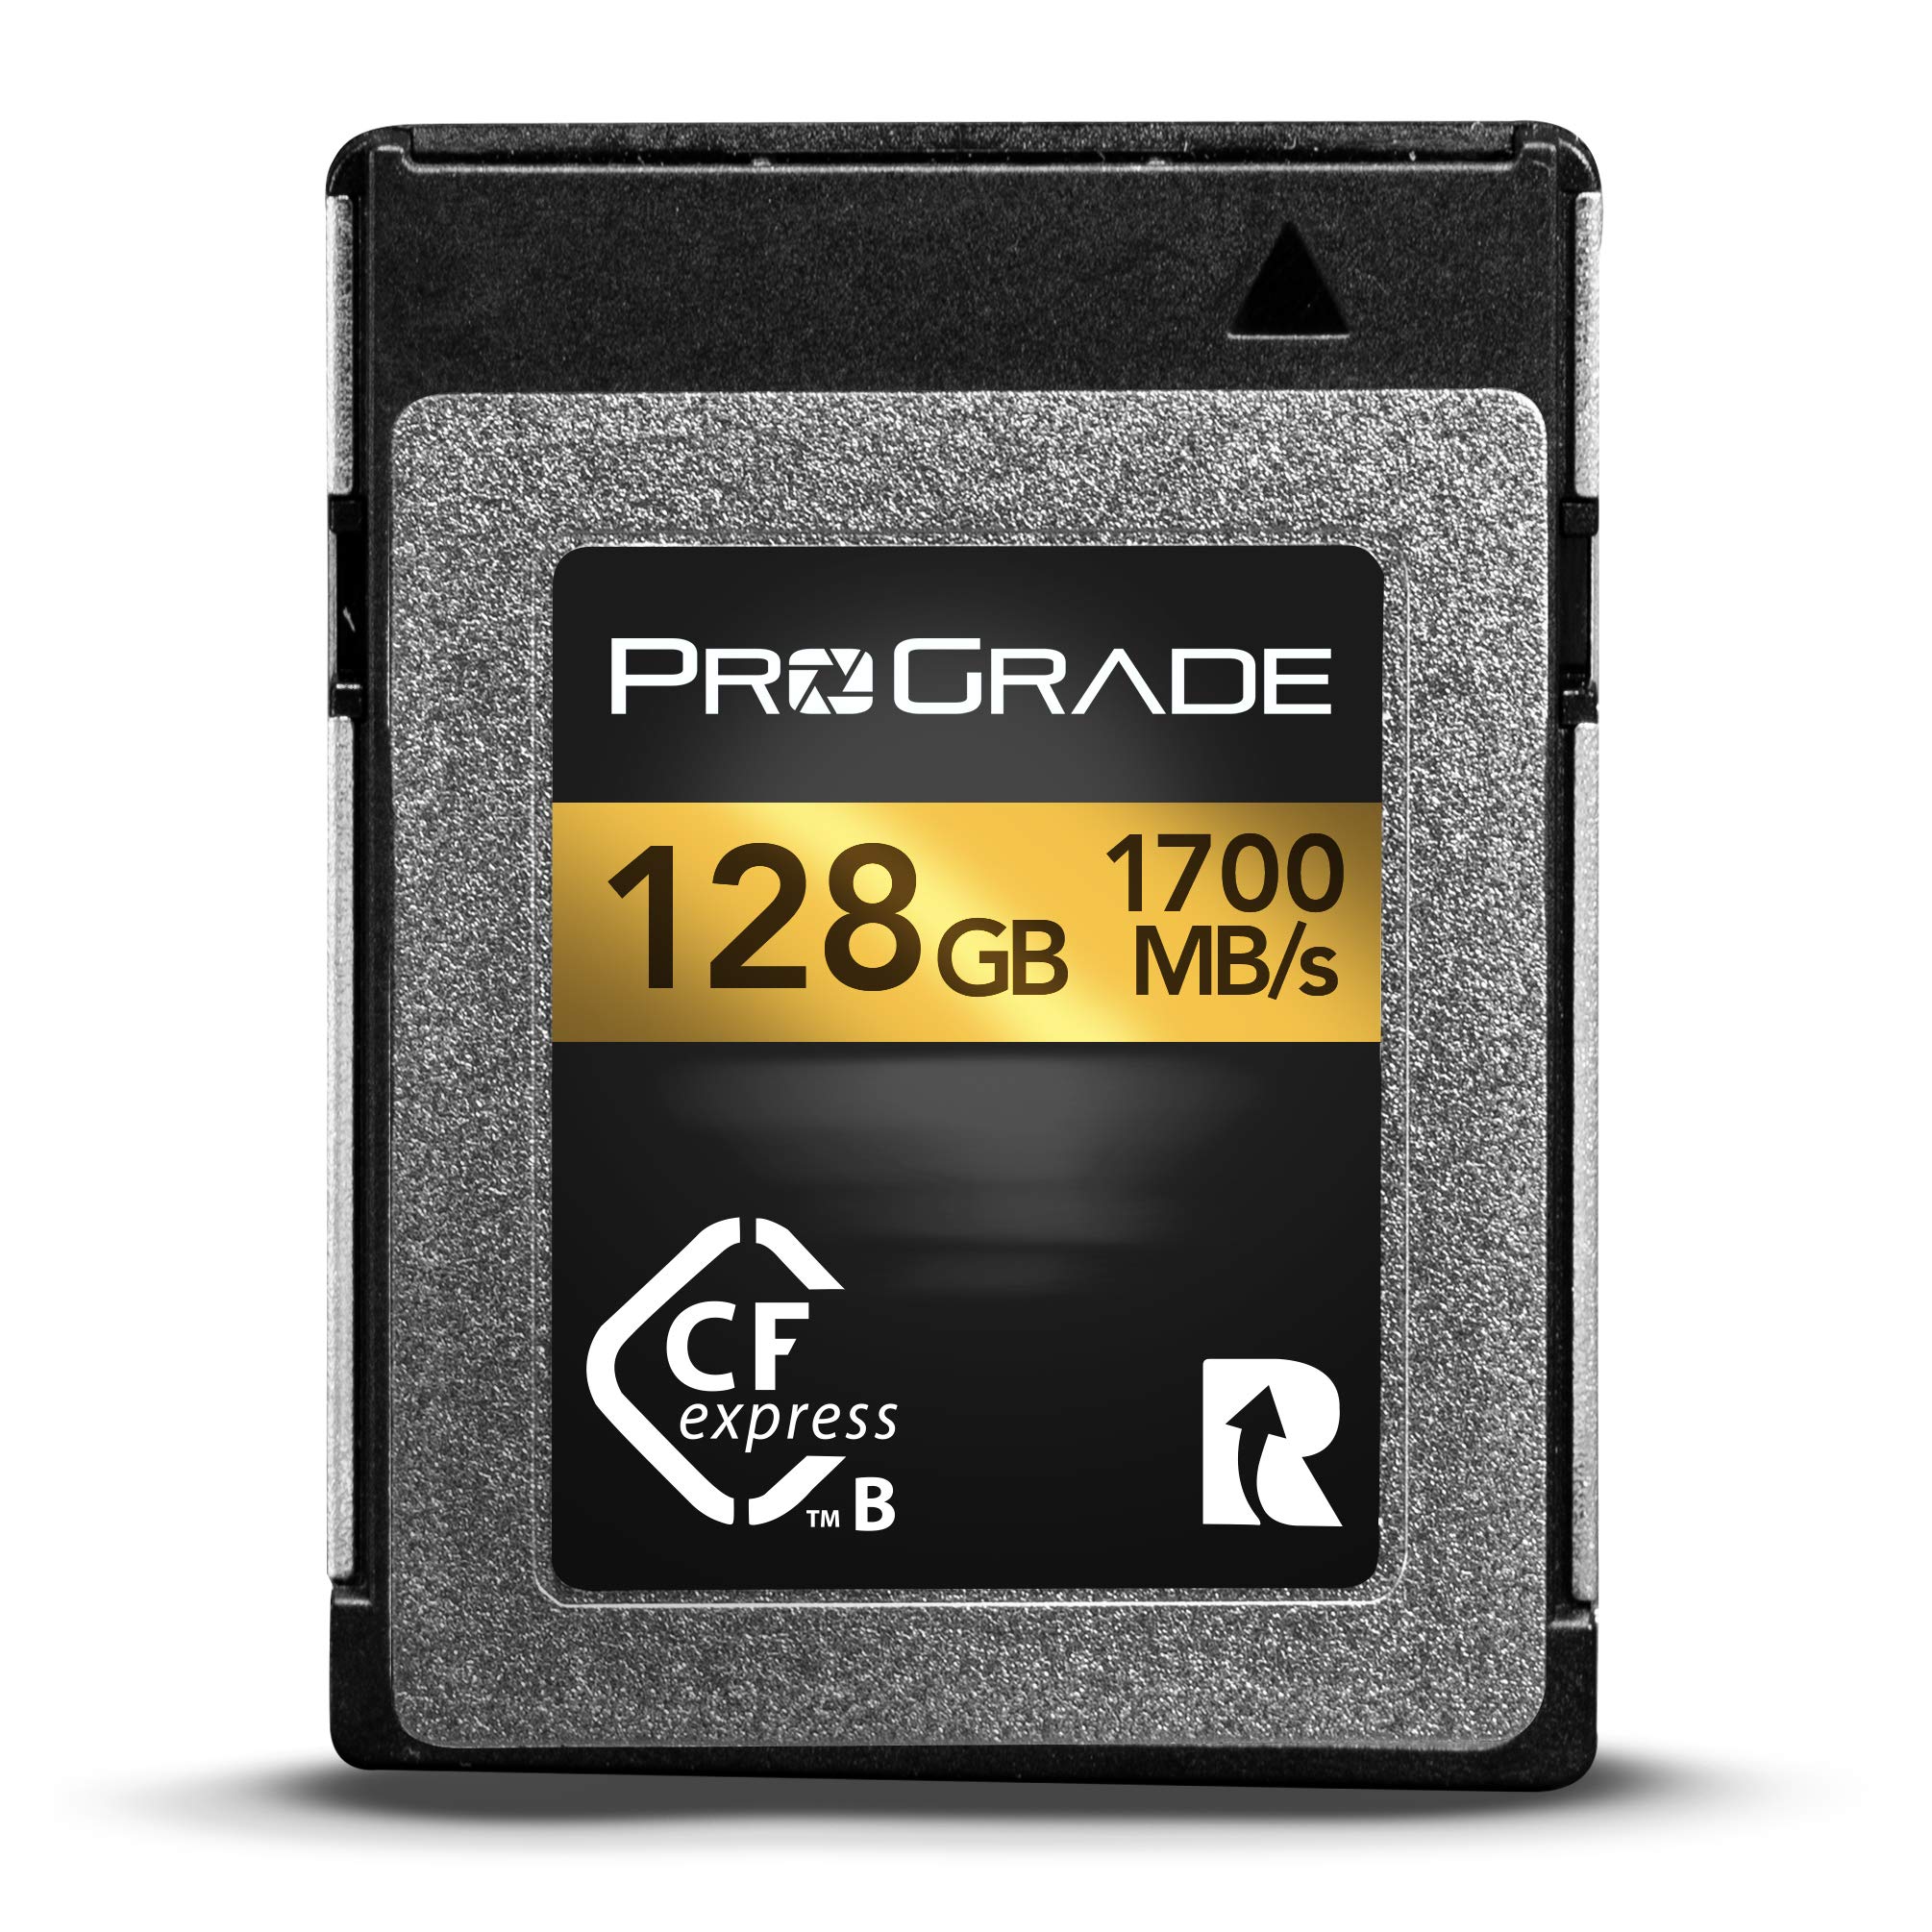 ProGrade Digital Memory Card - CFexpress Type B for Cameras